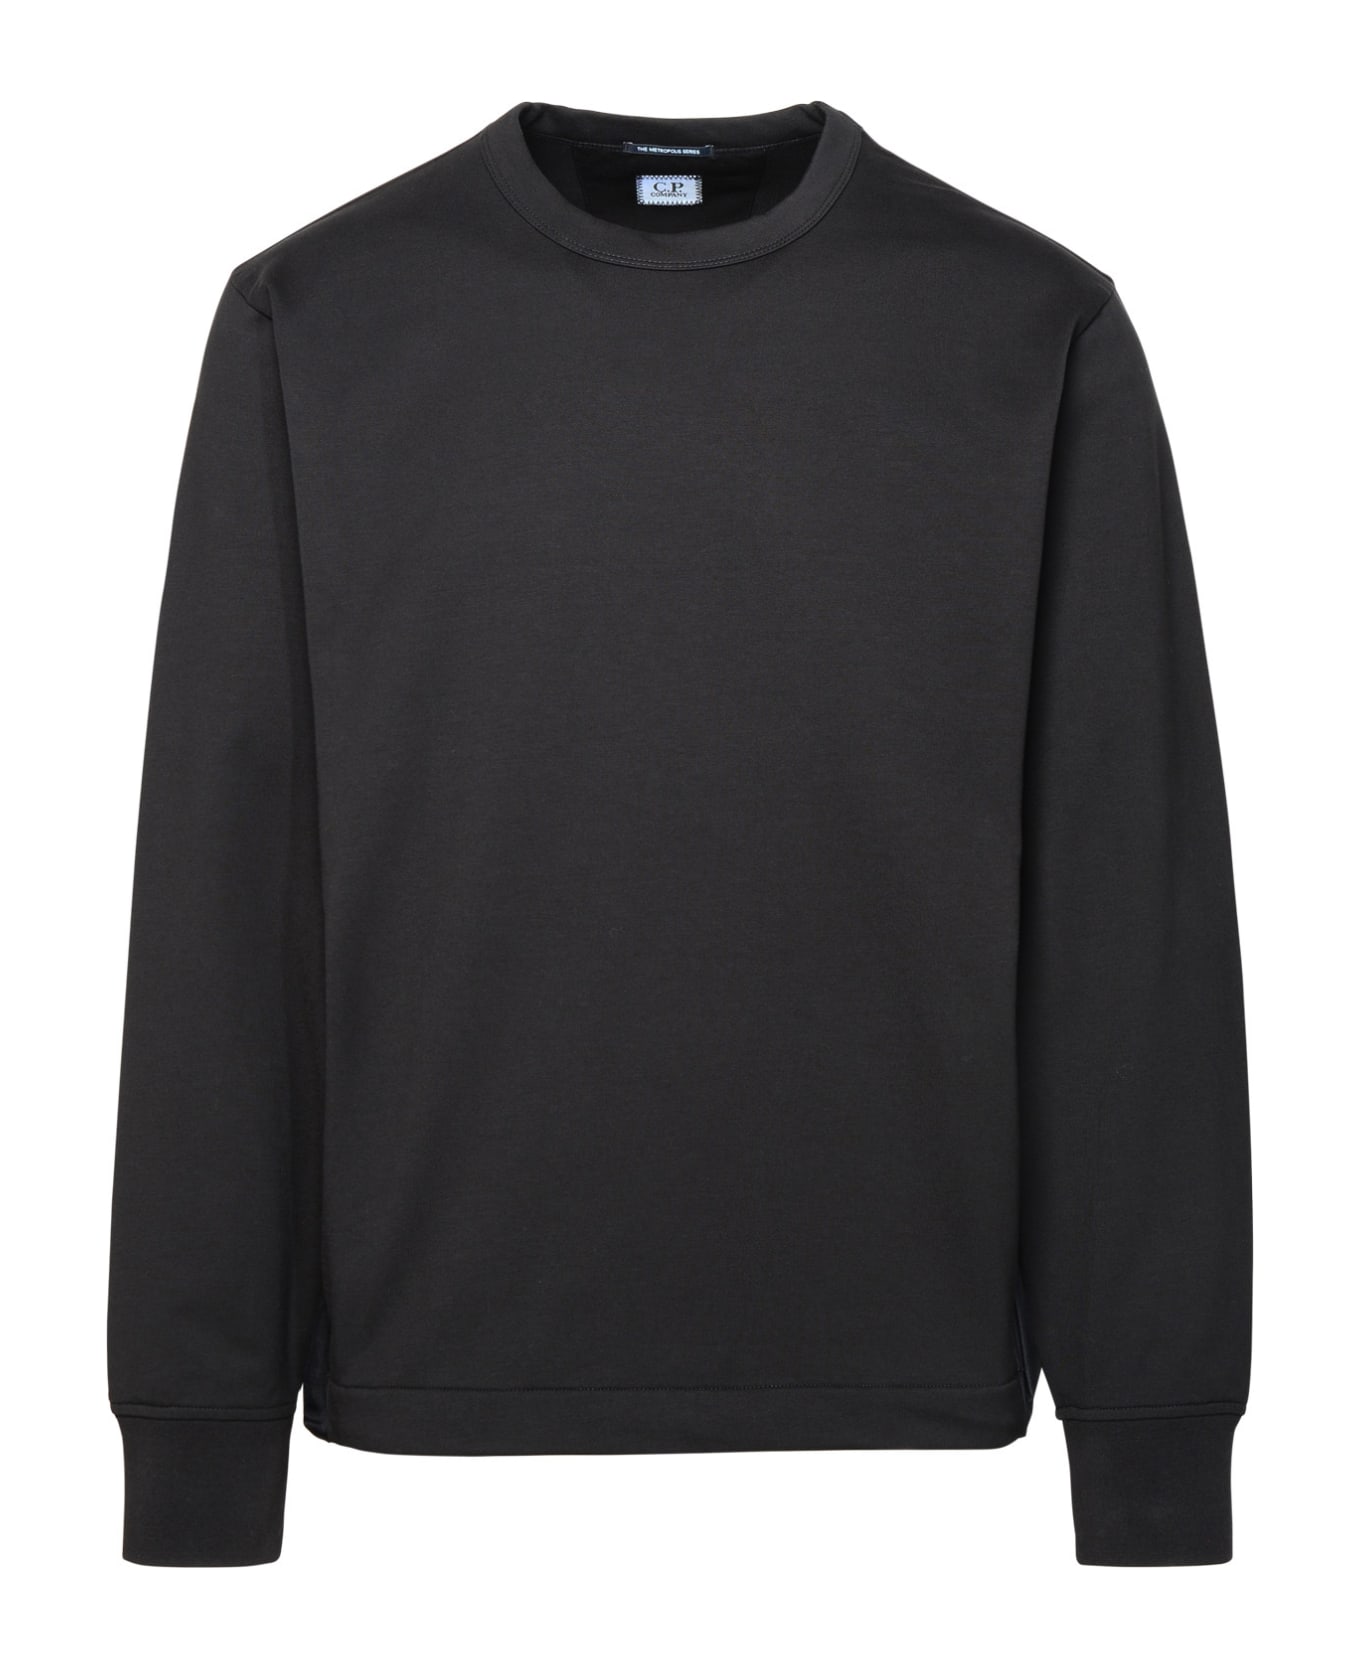 C.P. Company Black Cotton Blend Sweatshirt - Black フリース